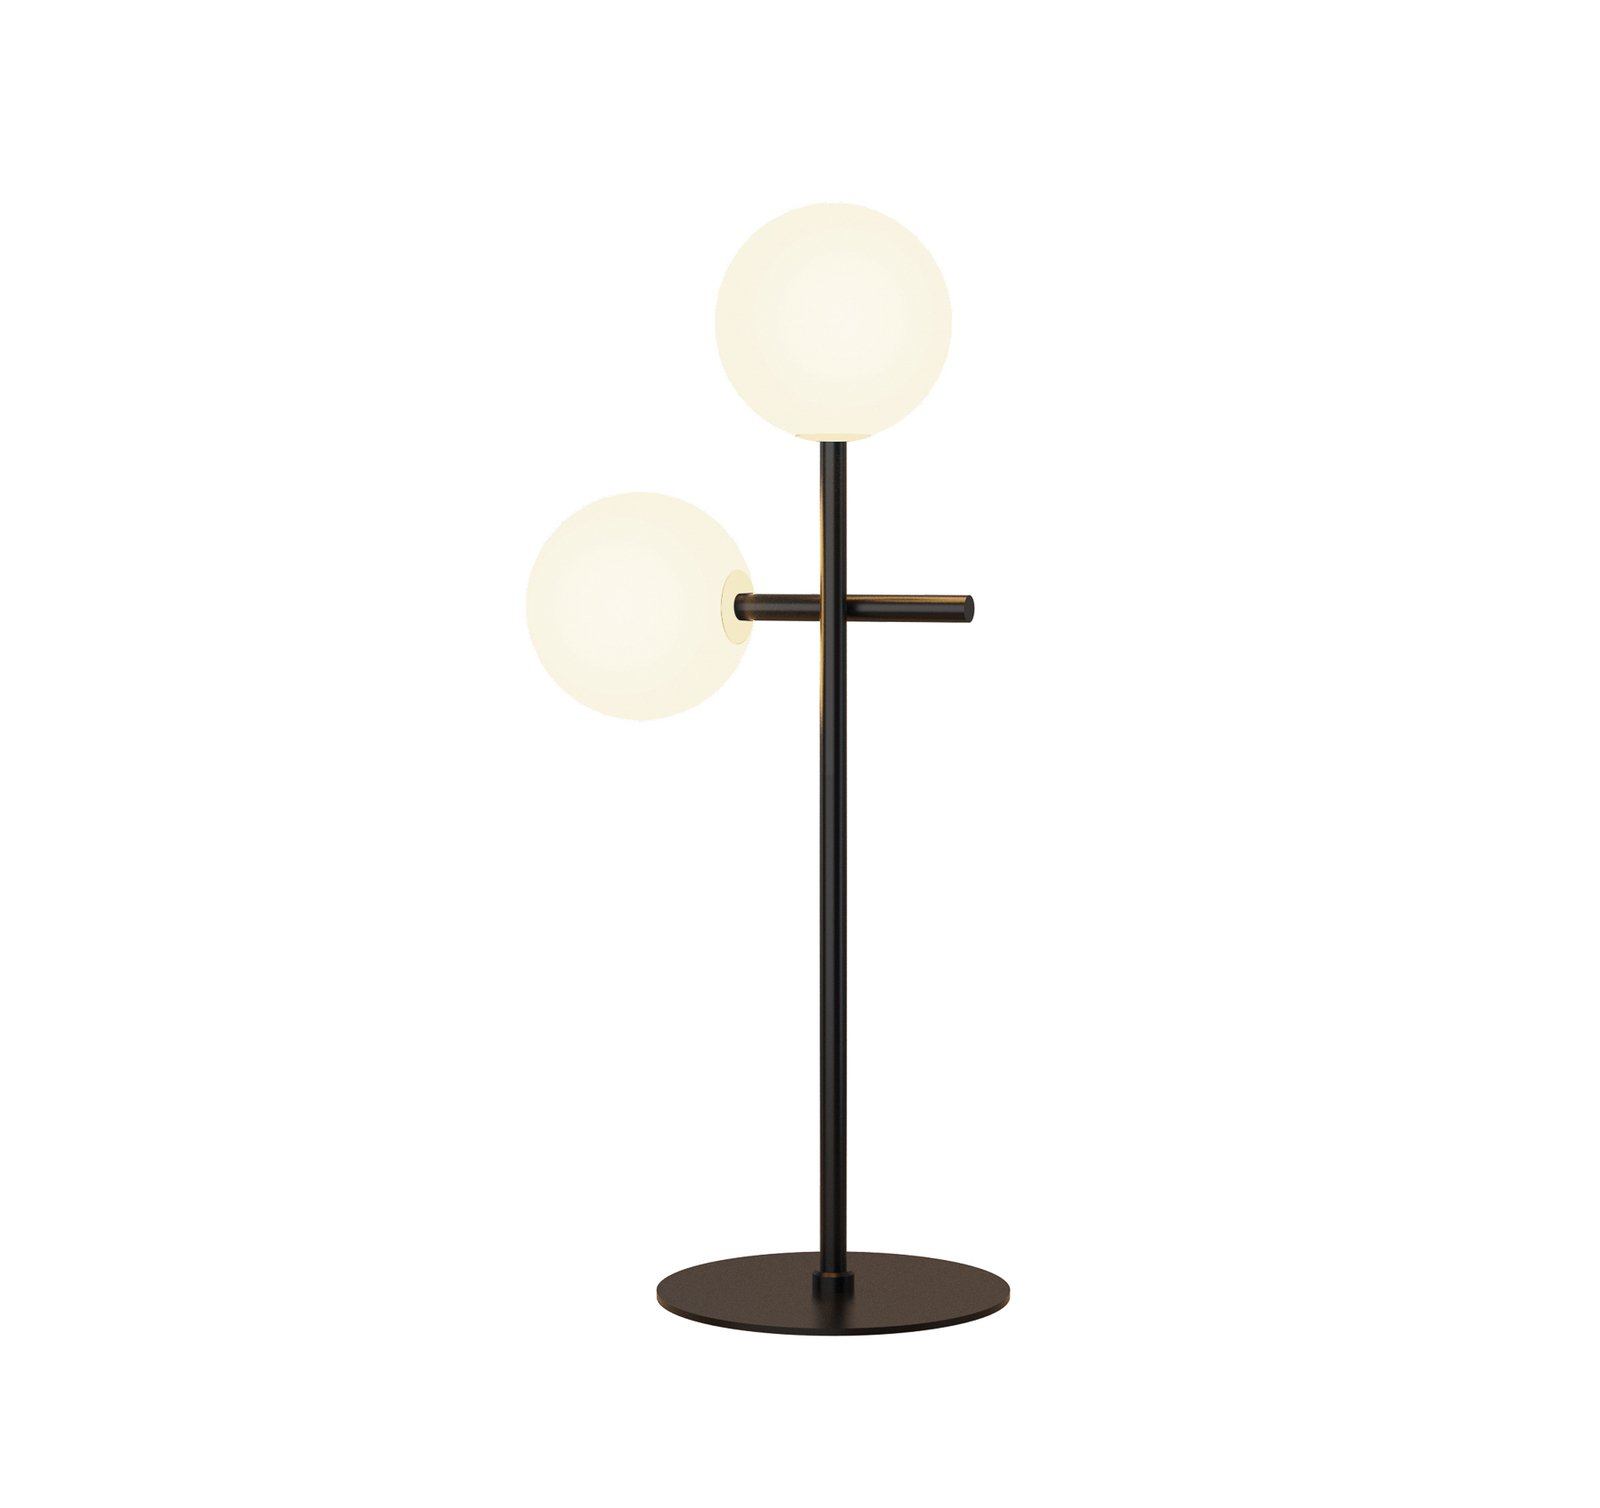 Cellar bordlampe, 2 lyskilder, jern, sort, glas, hvid